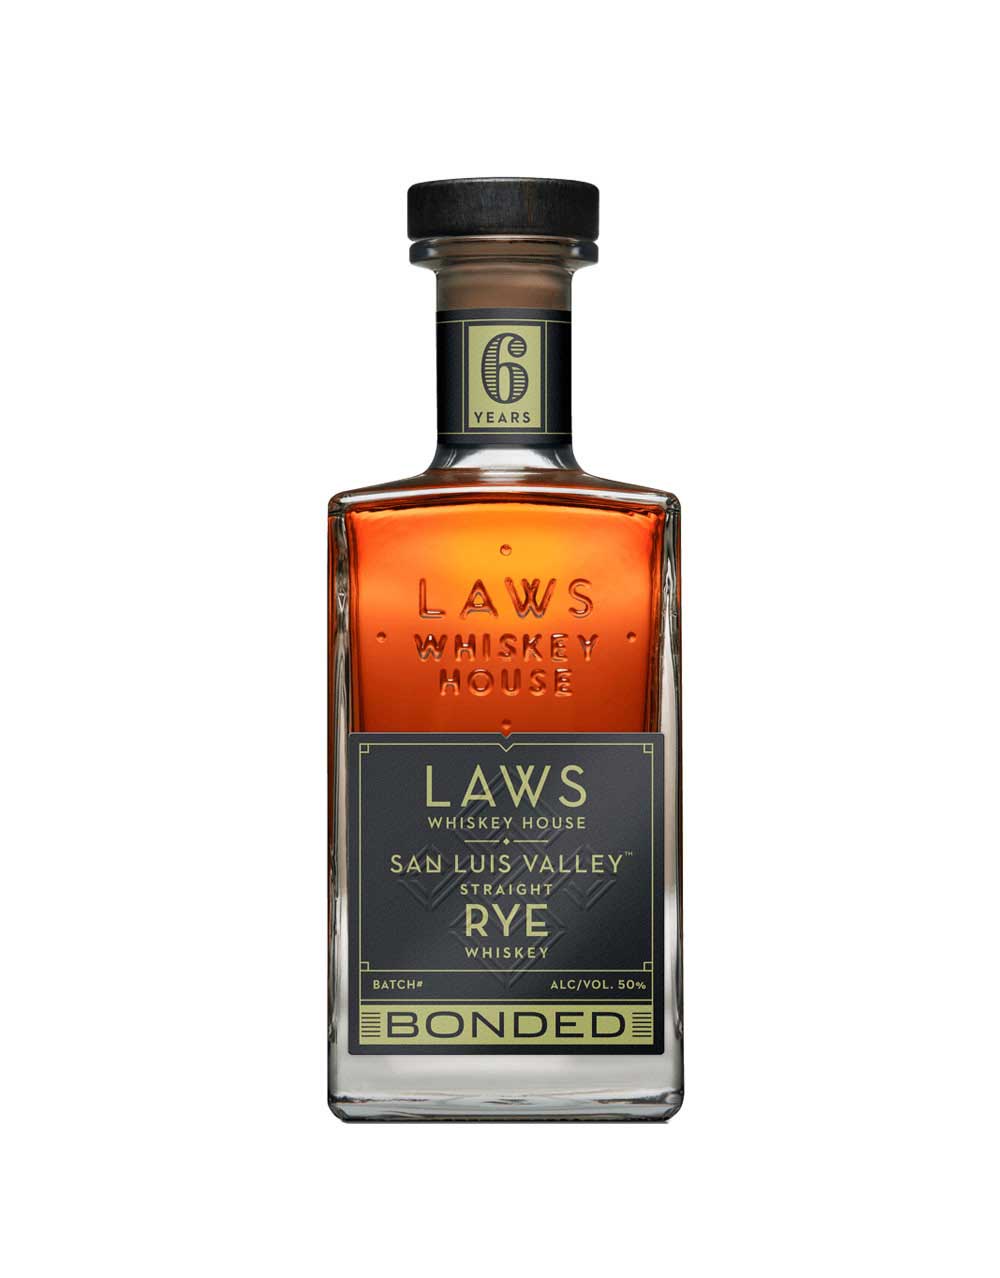 The Glenlivet Guardians' Chapter Single Malt Scotch Whisky